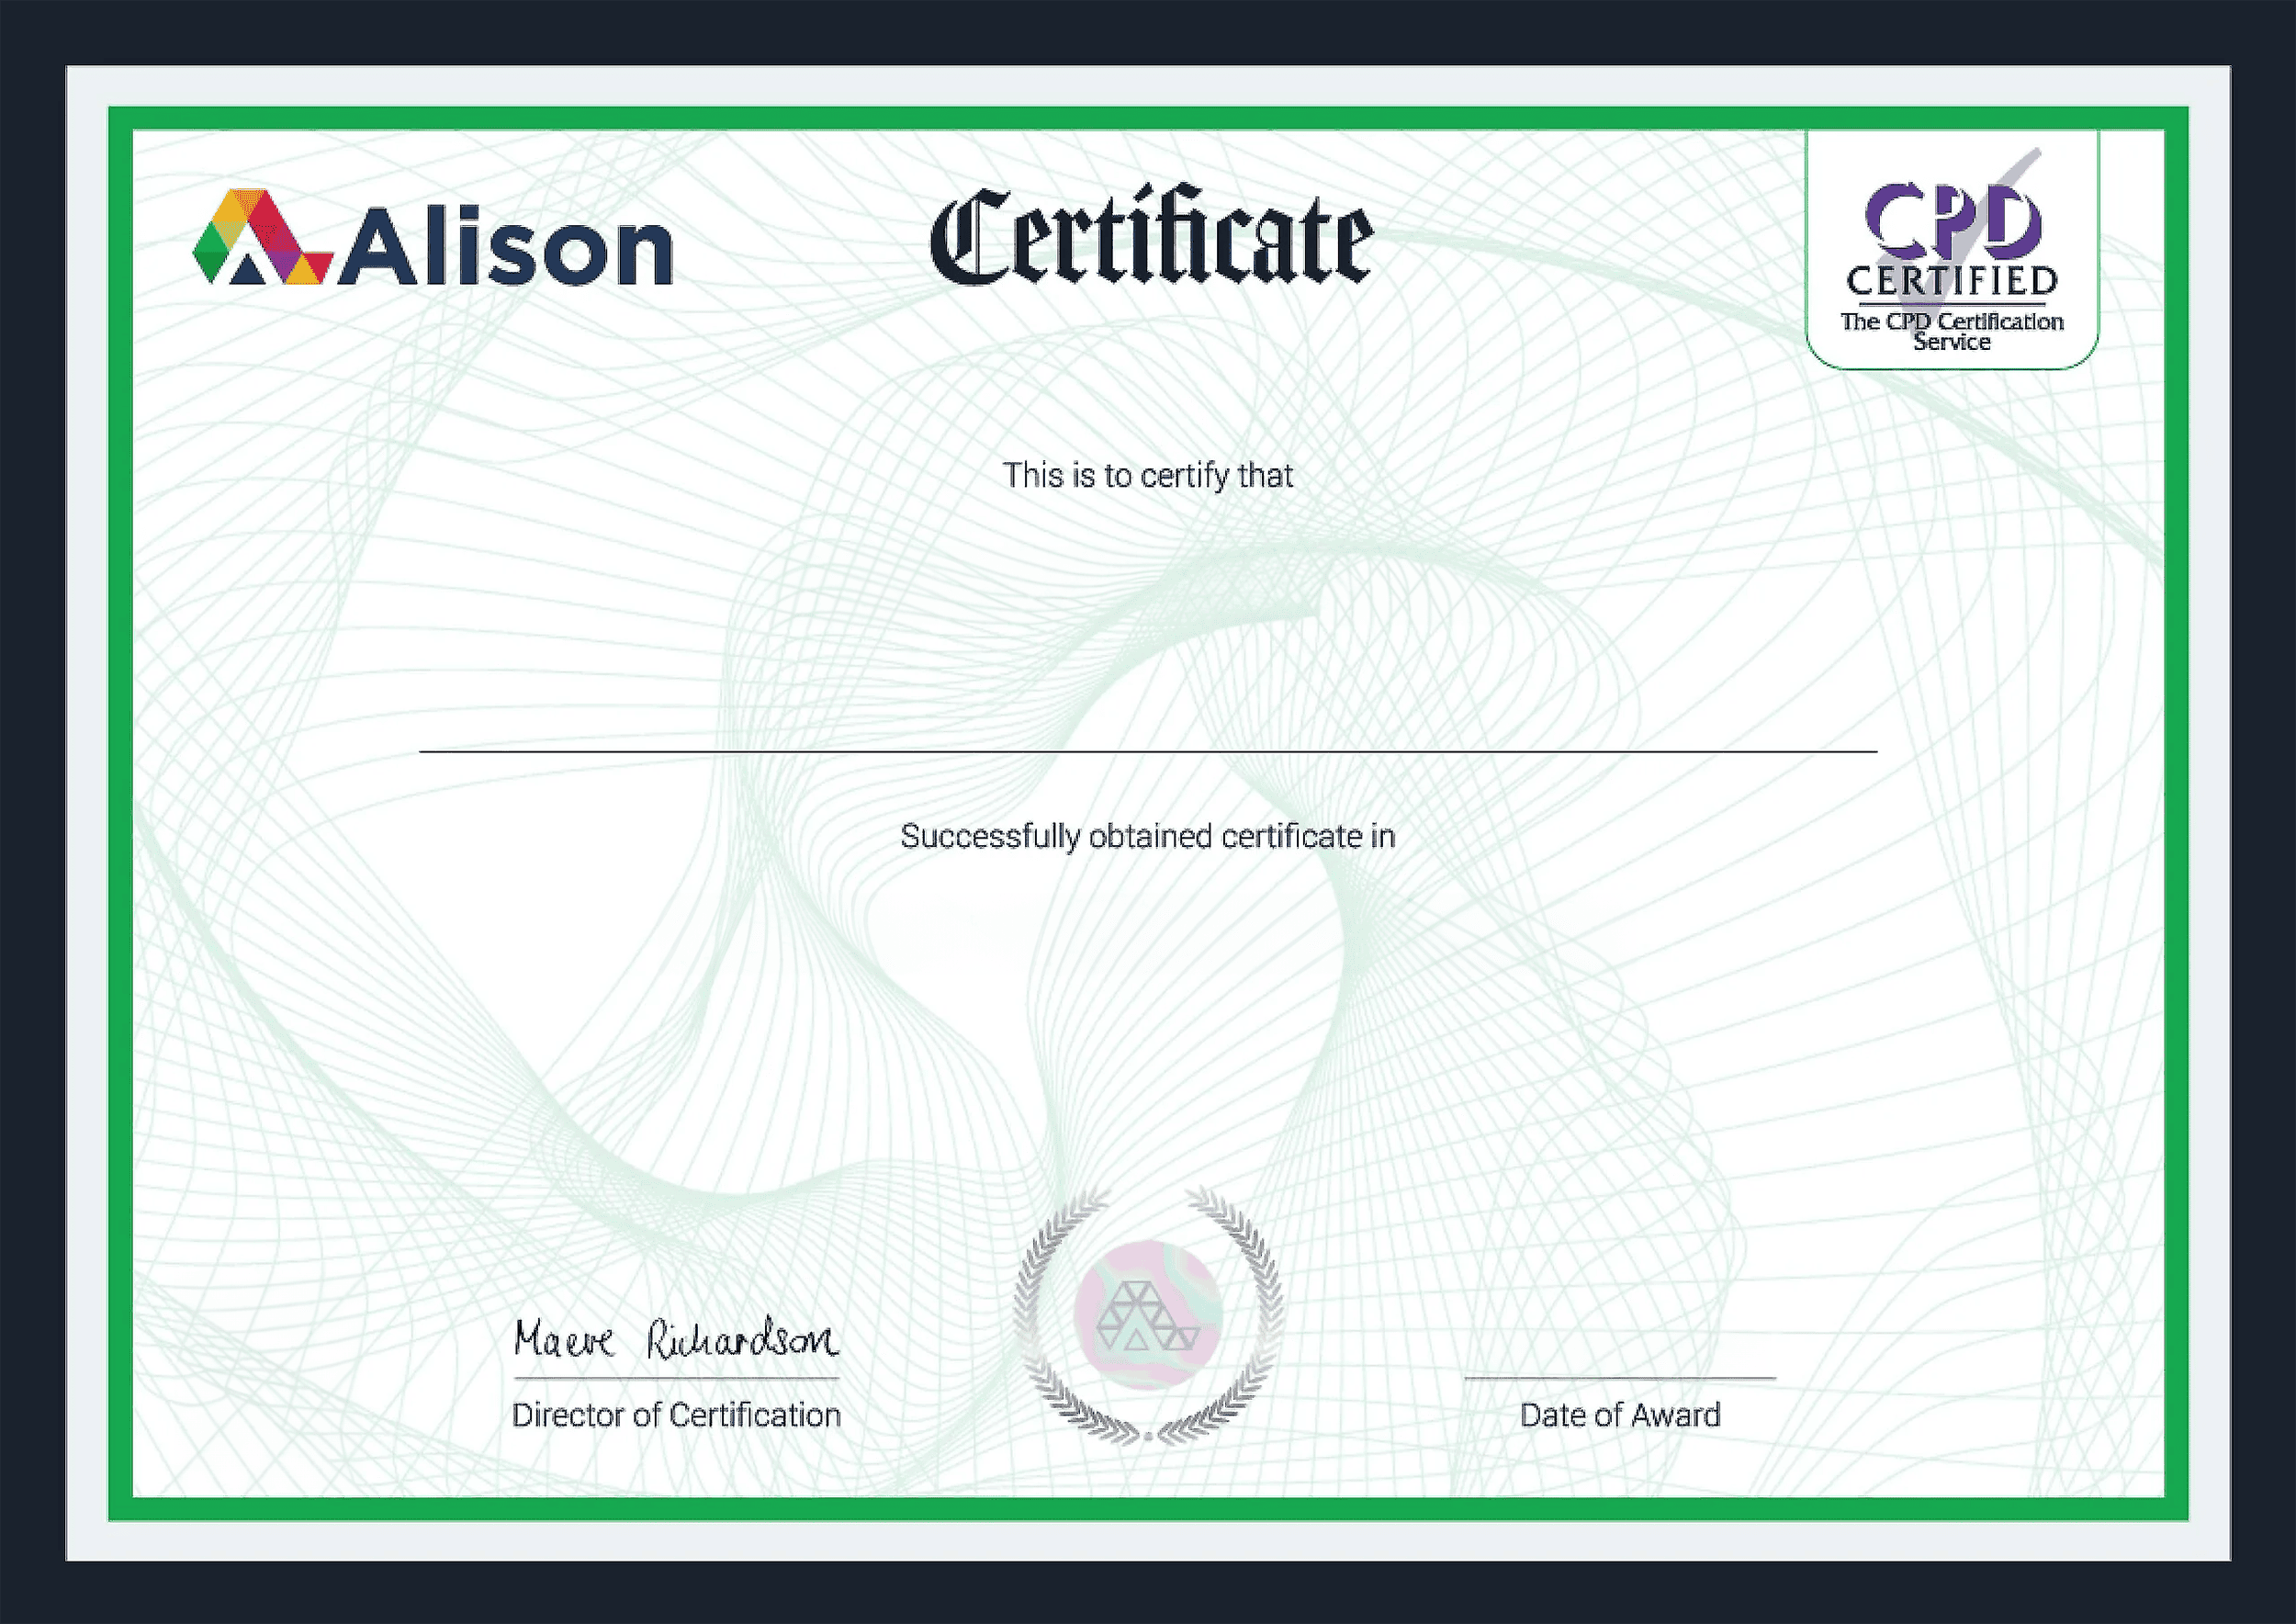 Alison – Certificate